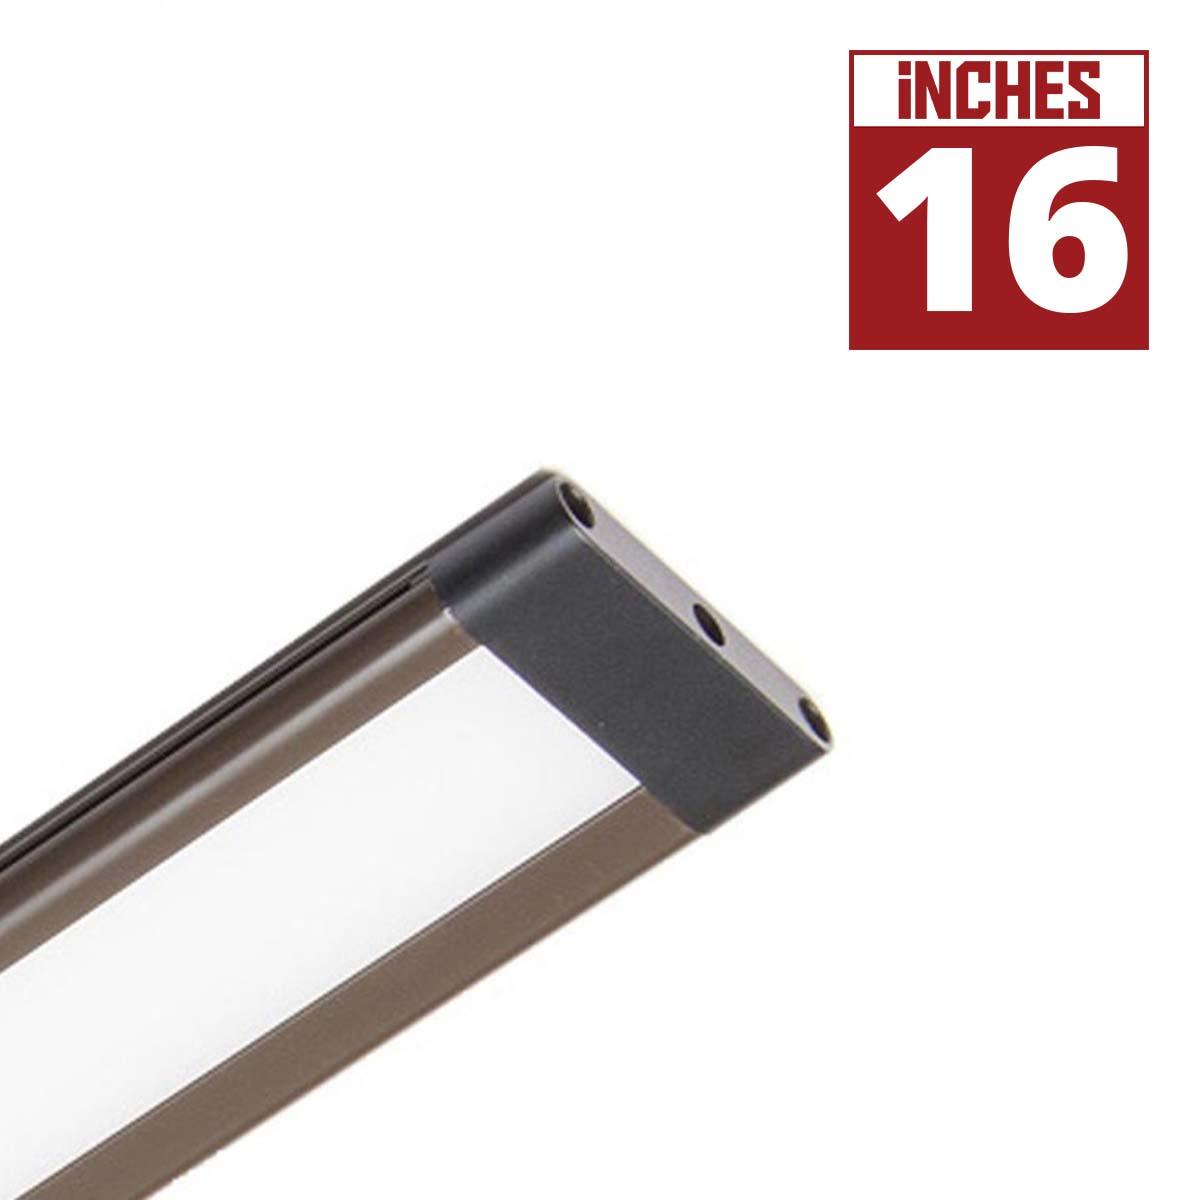 SlimEdge 16 Inch Plug In Under Cabinet LED Light, 325 Lumens, Linkable, 24V - Bees Lighting